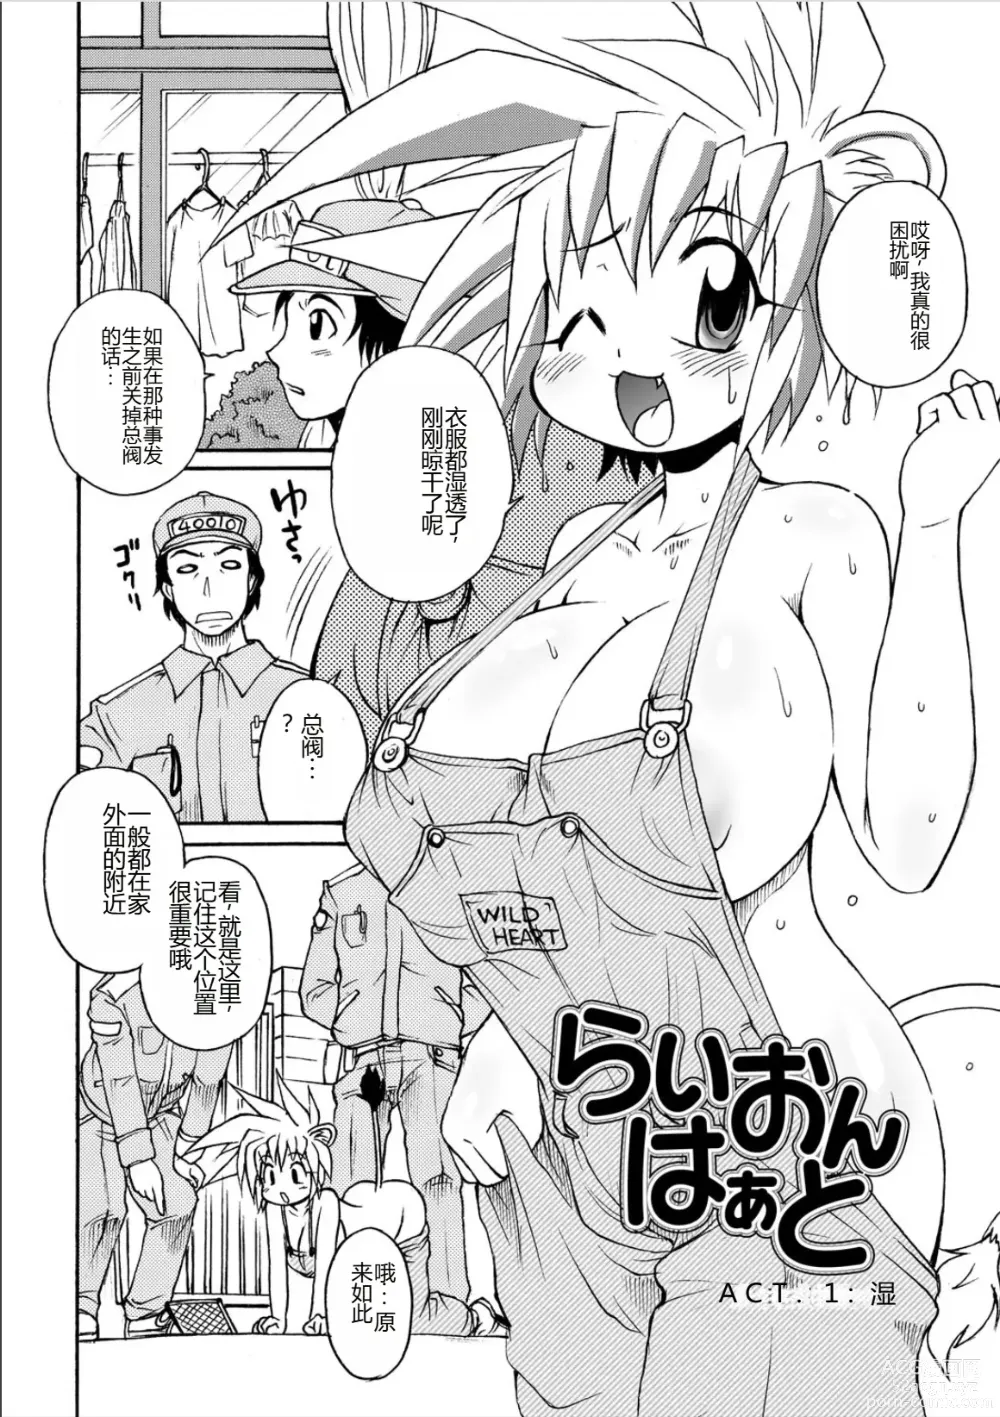 Page 4 of manga Lion Heart